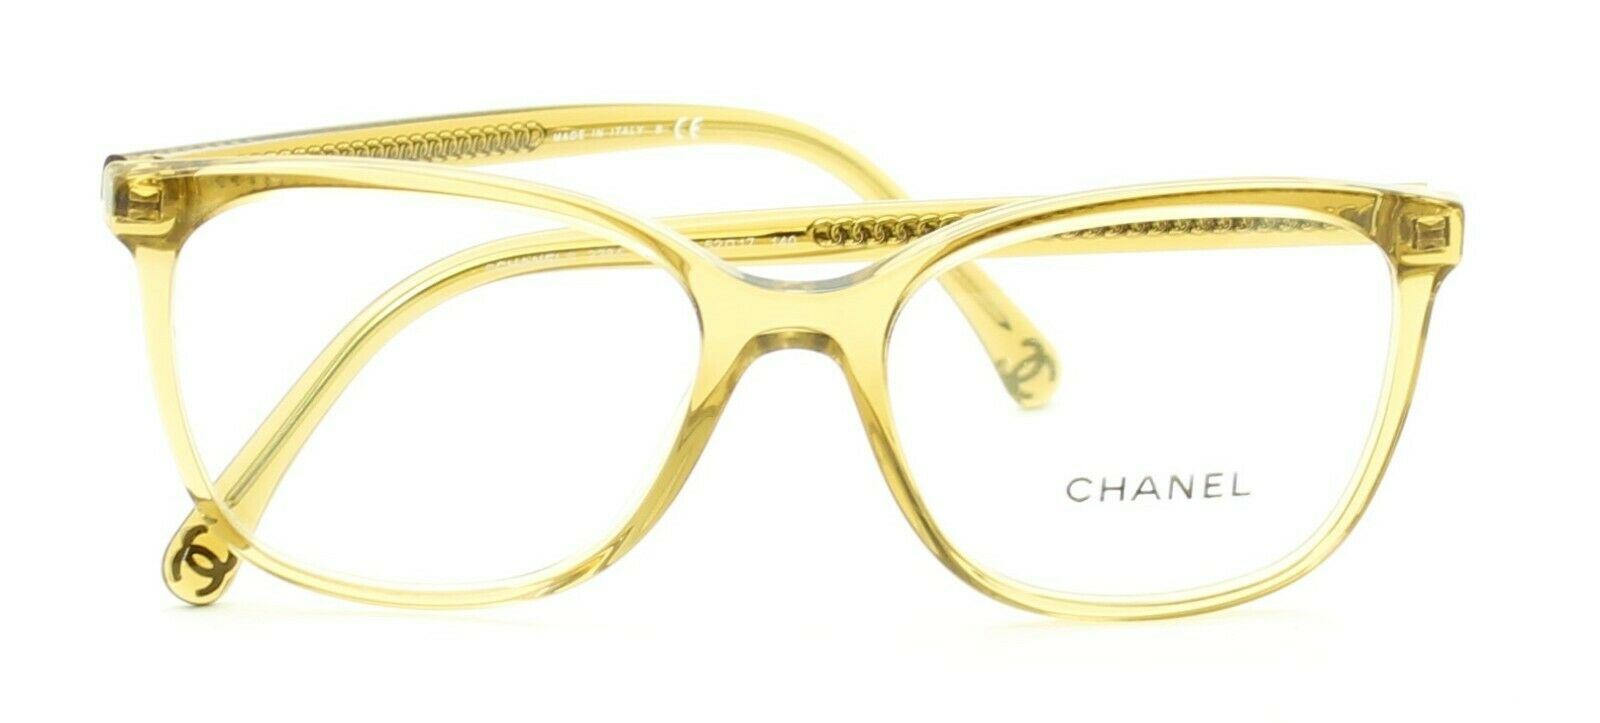 CHANEL 3384 c.1090 Eyewear 52mm FRAMES Eyeglasses RX Optical Glasses New - Italy